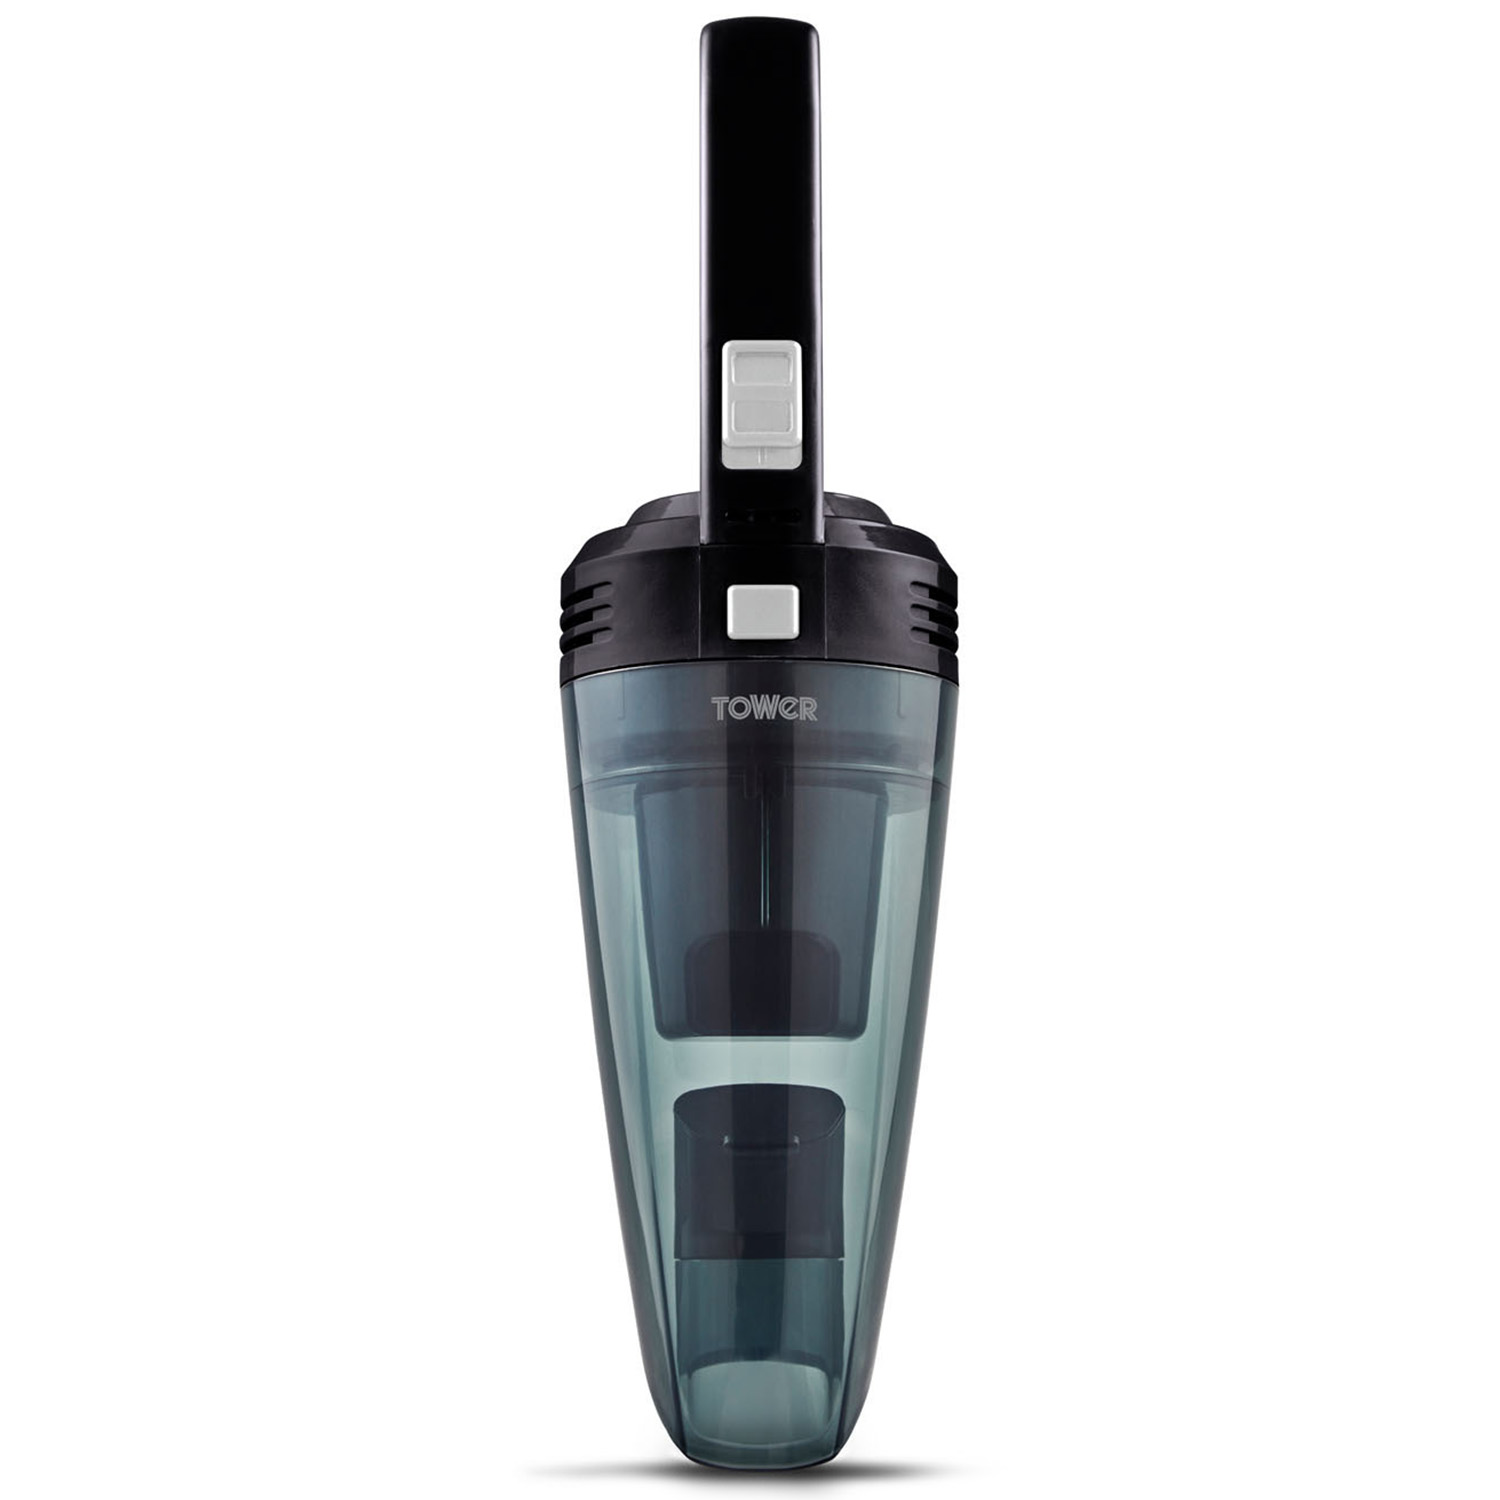 Tower Platinum Wet Dry Handheld Vacuum Cleaner Image 1